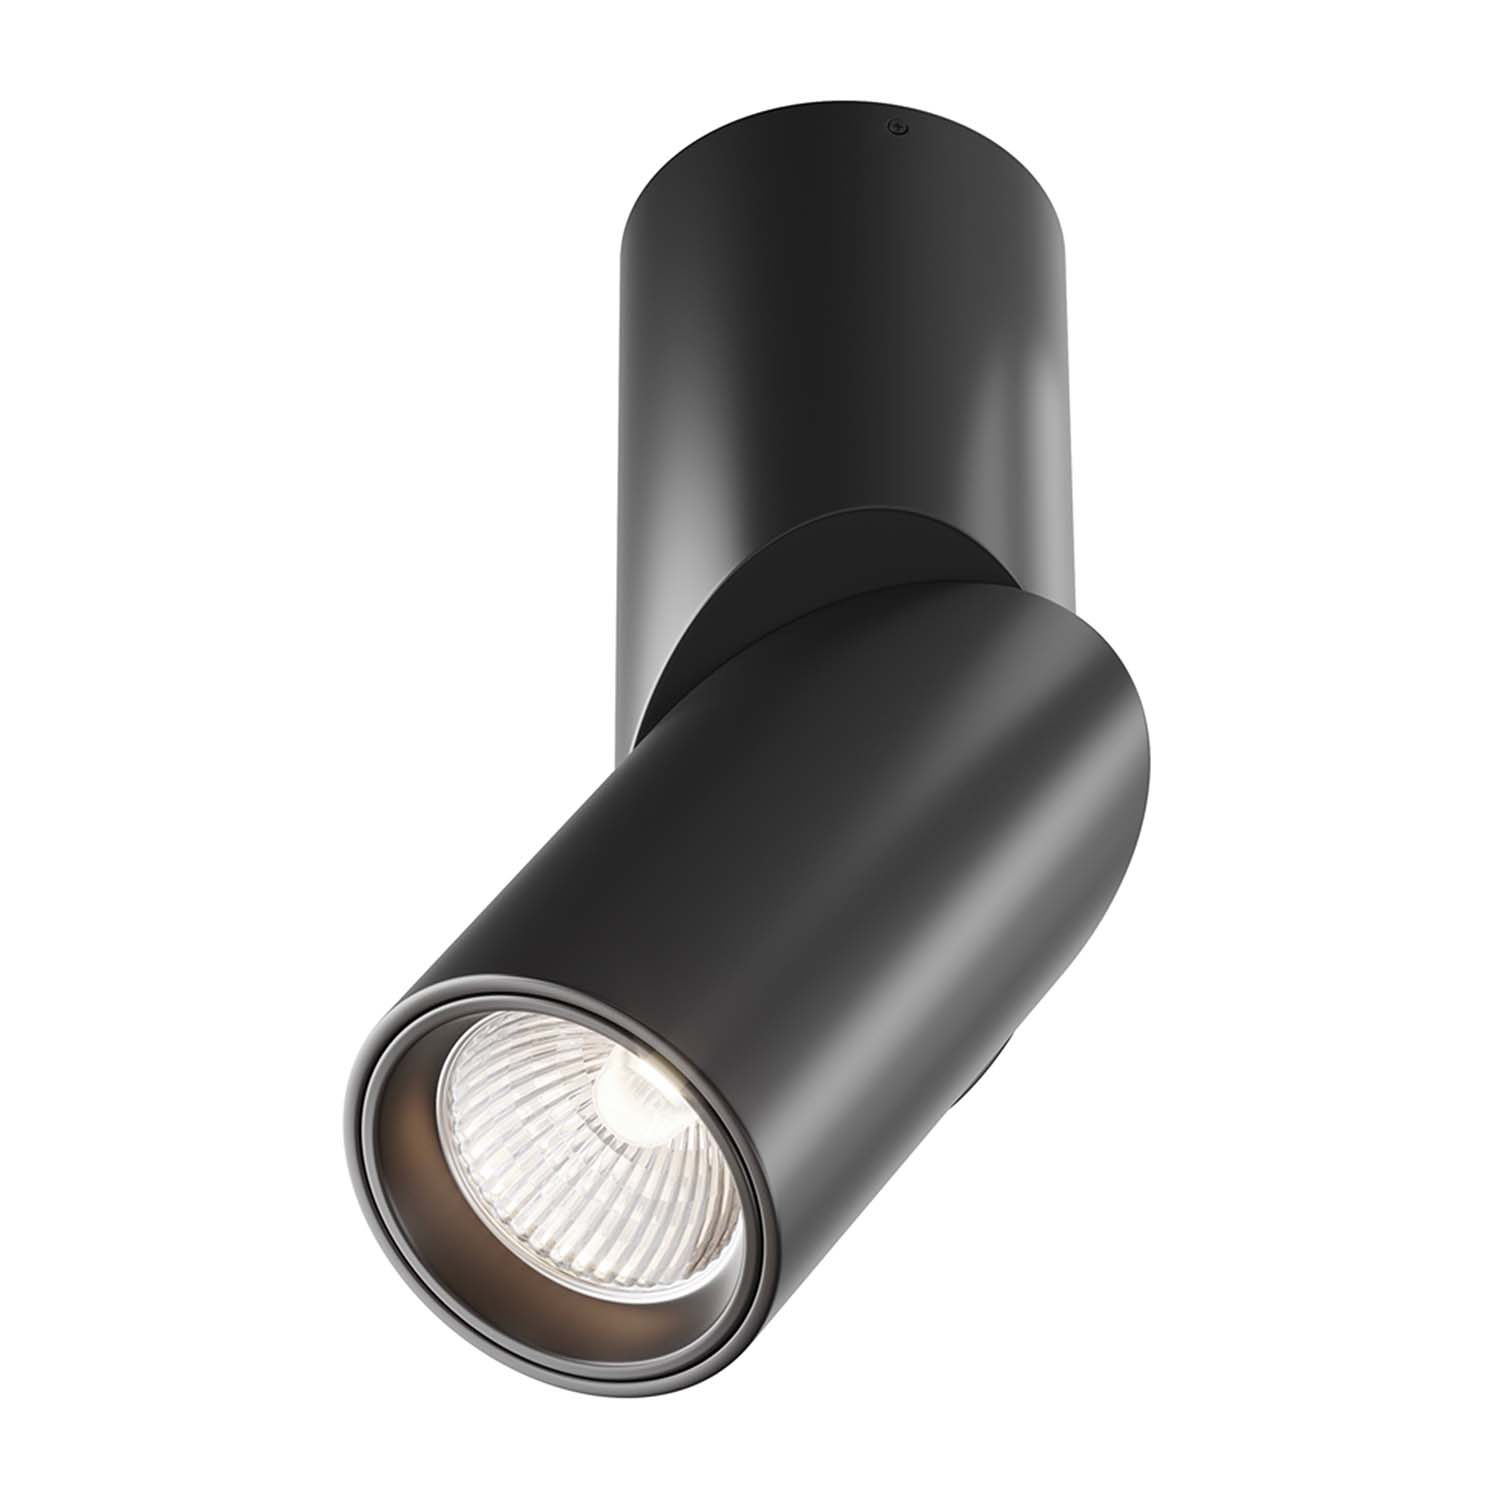 DAFNE - Designer adjustable retractable surface-mounted spotlight